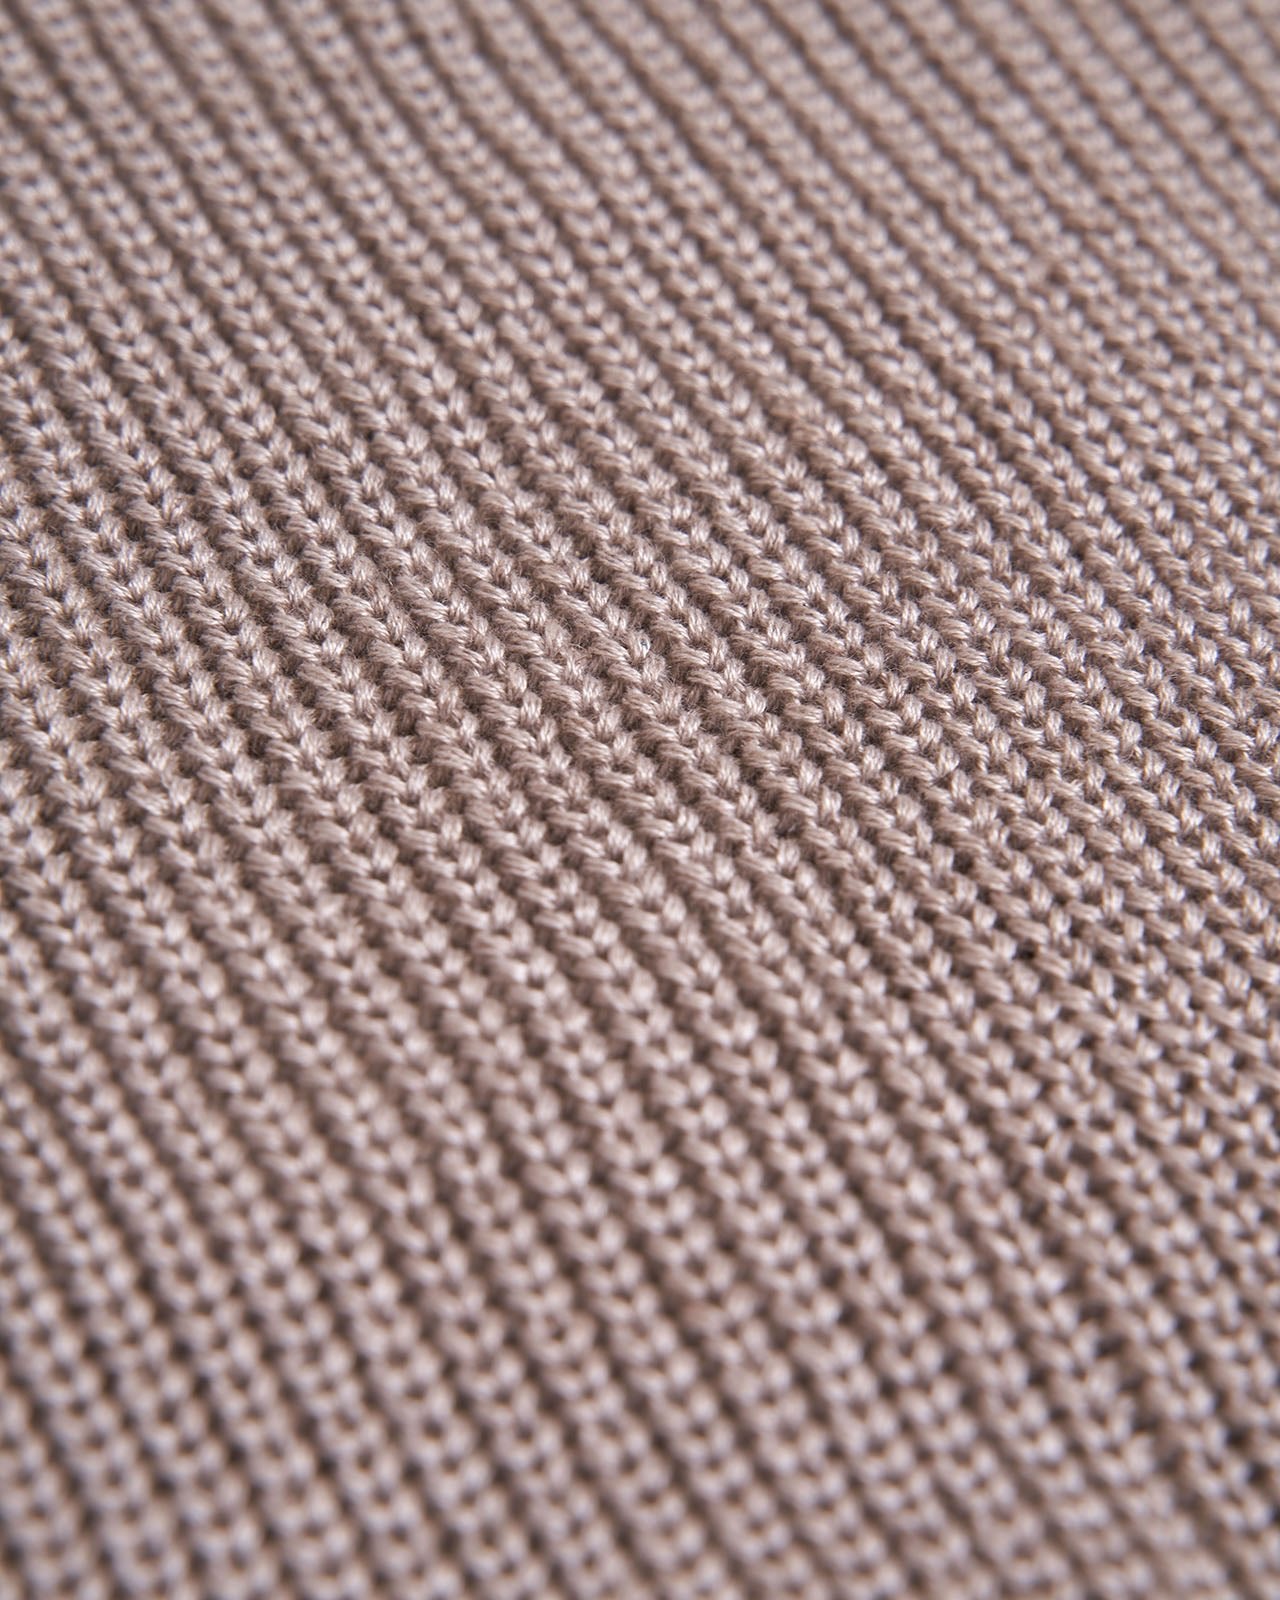 Linen oversized sweater details